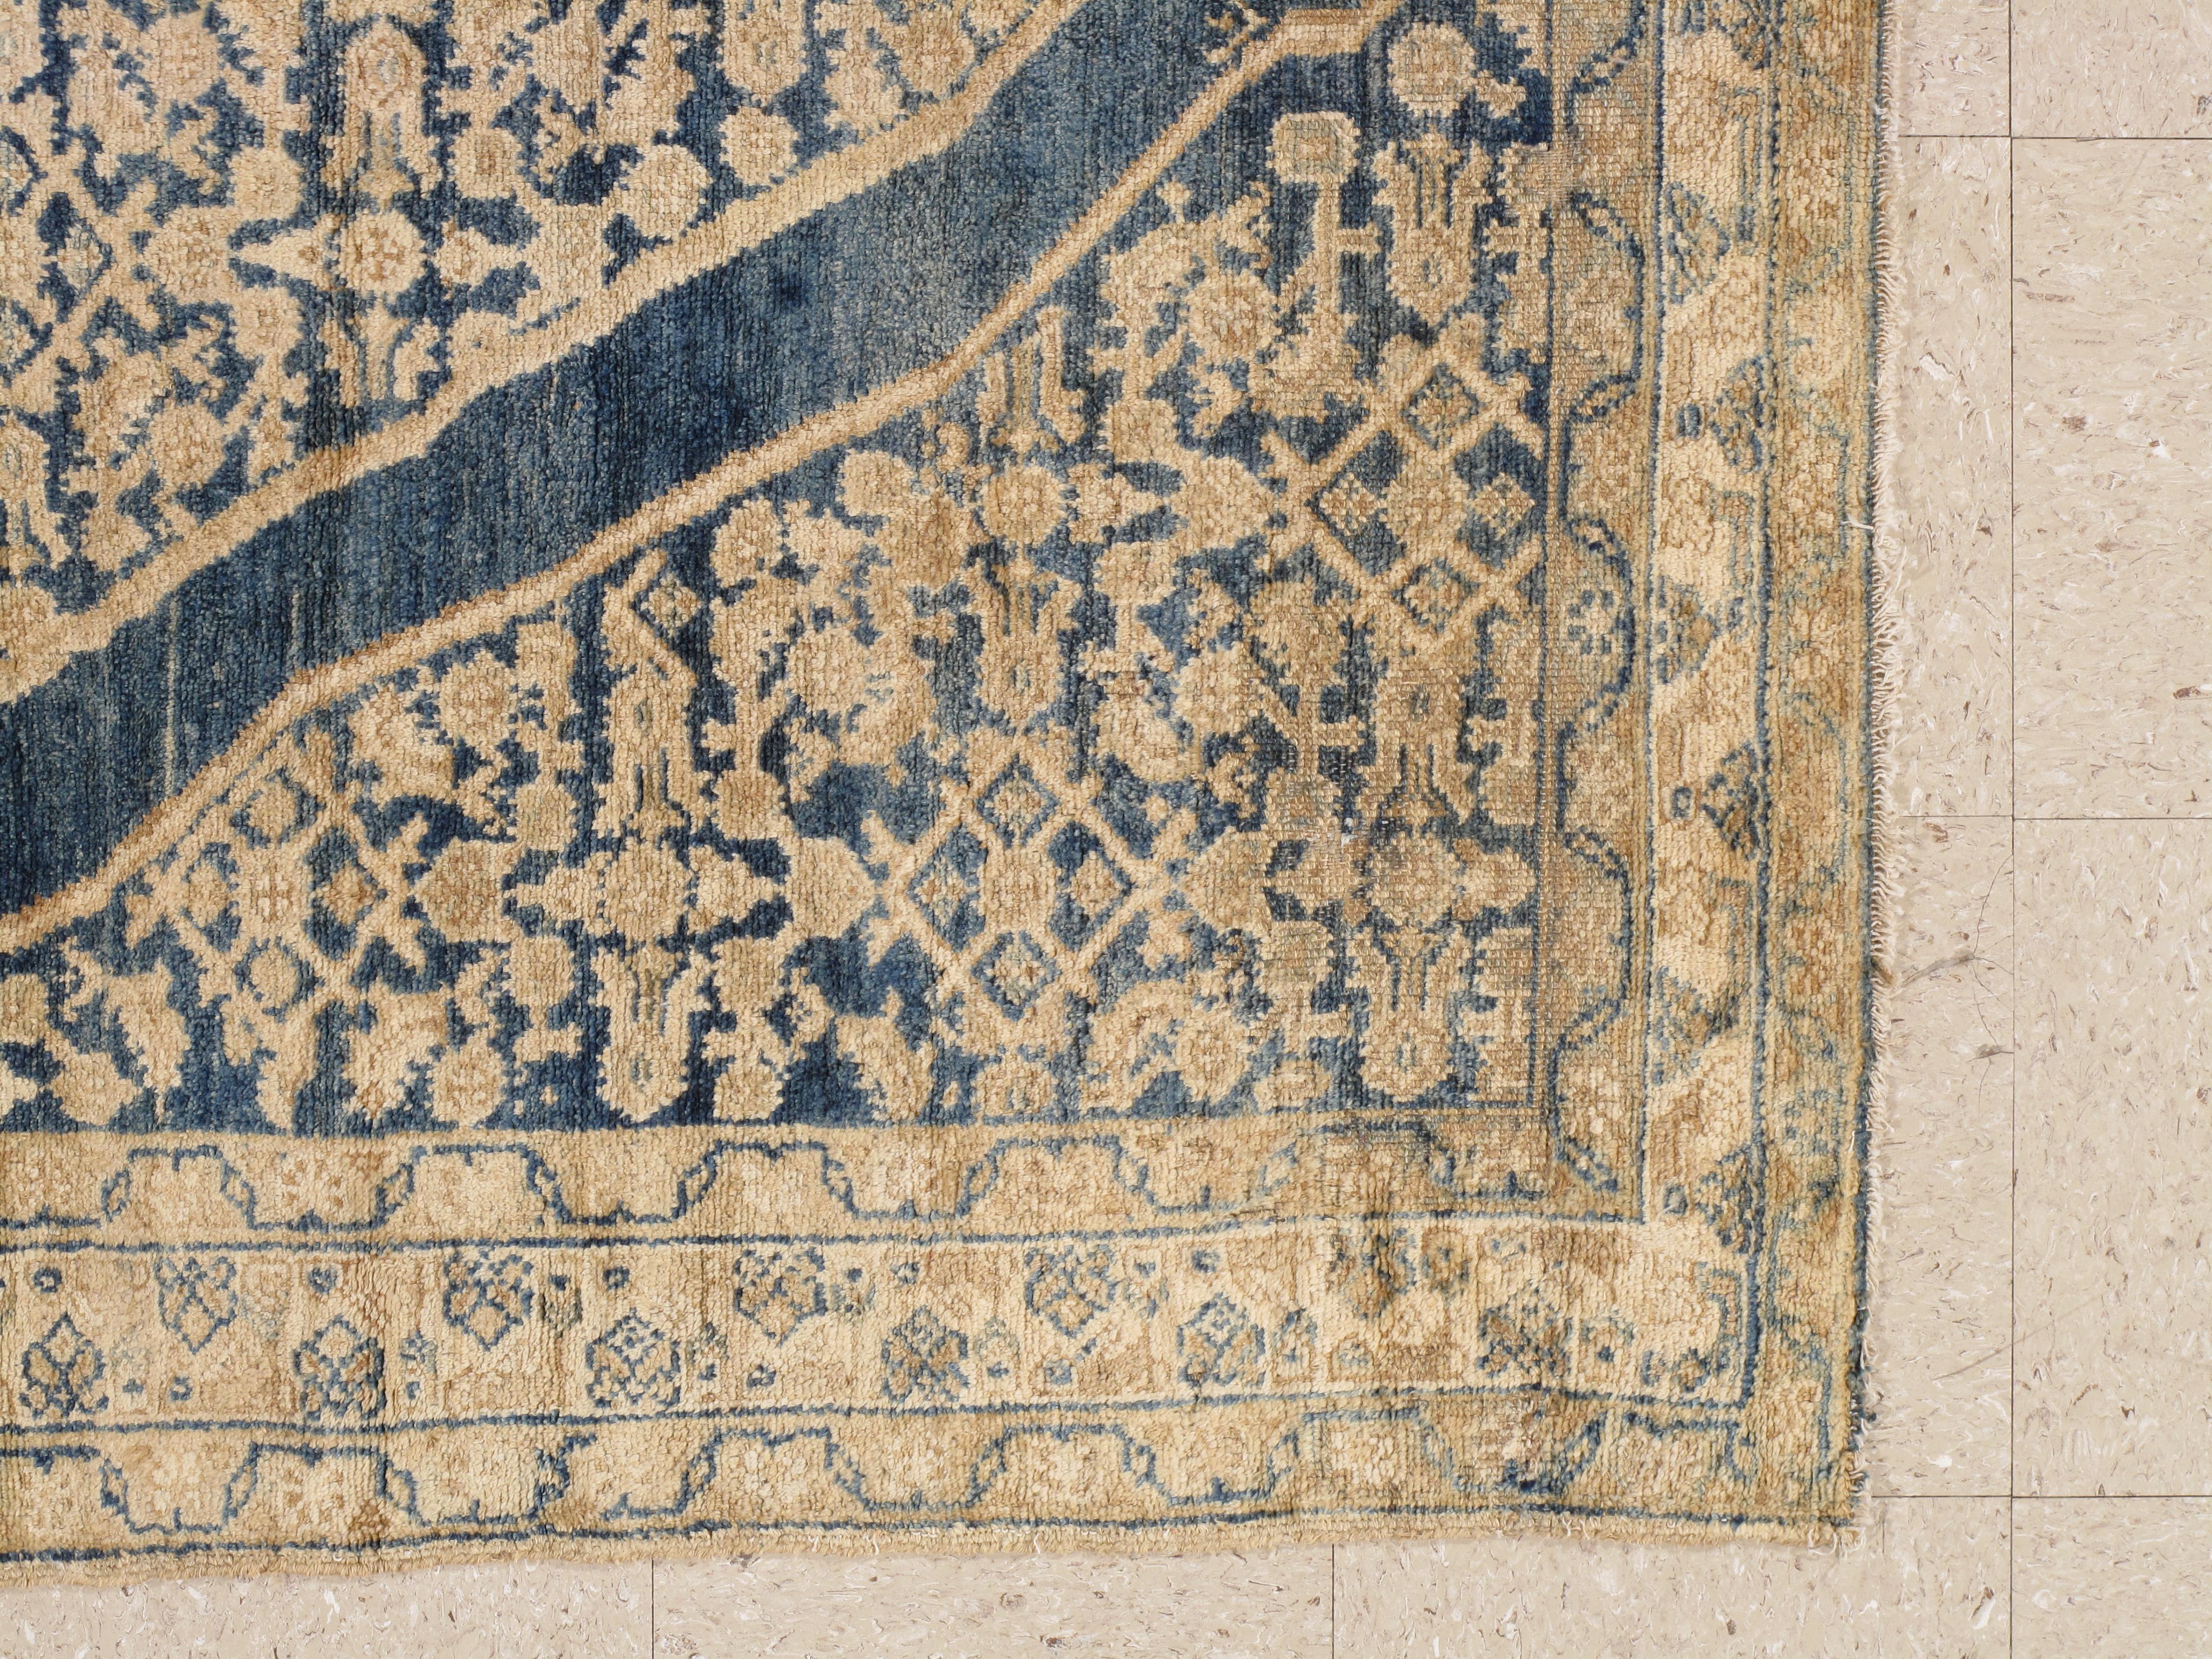 Wool Antique Persian Malayer Runner, Handmade Oriental Rugs, Navy, Light Blue, Cream For Sale